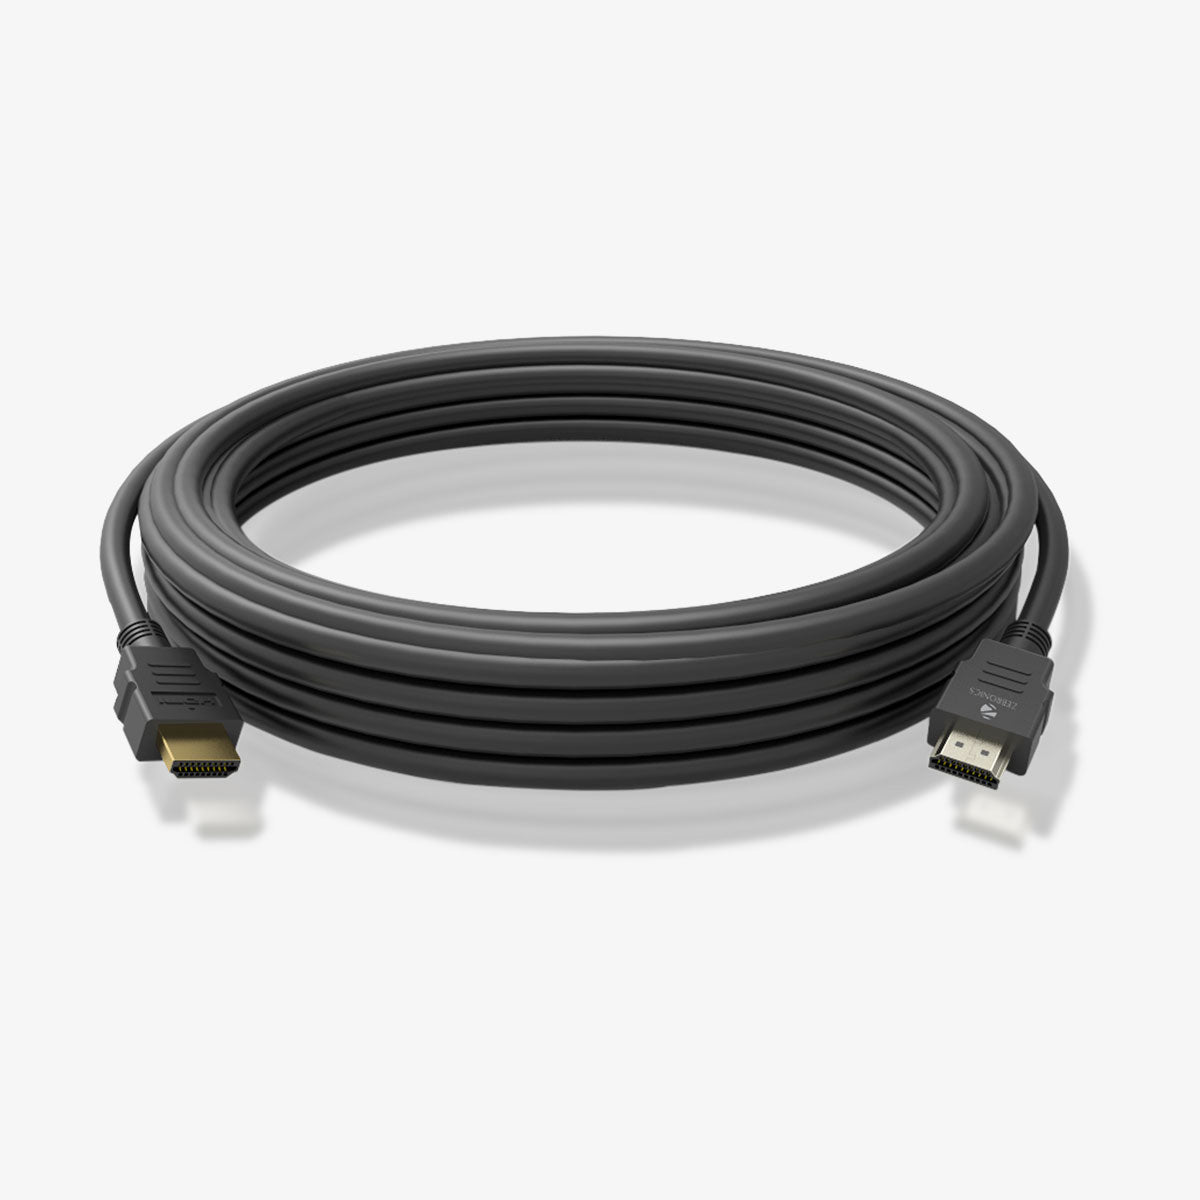 ZEB-HAA3020 (3 Meter) HDMI Cable - Zebronics